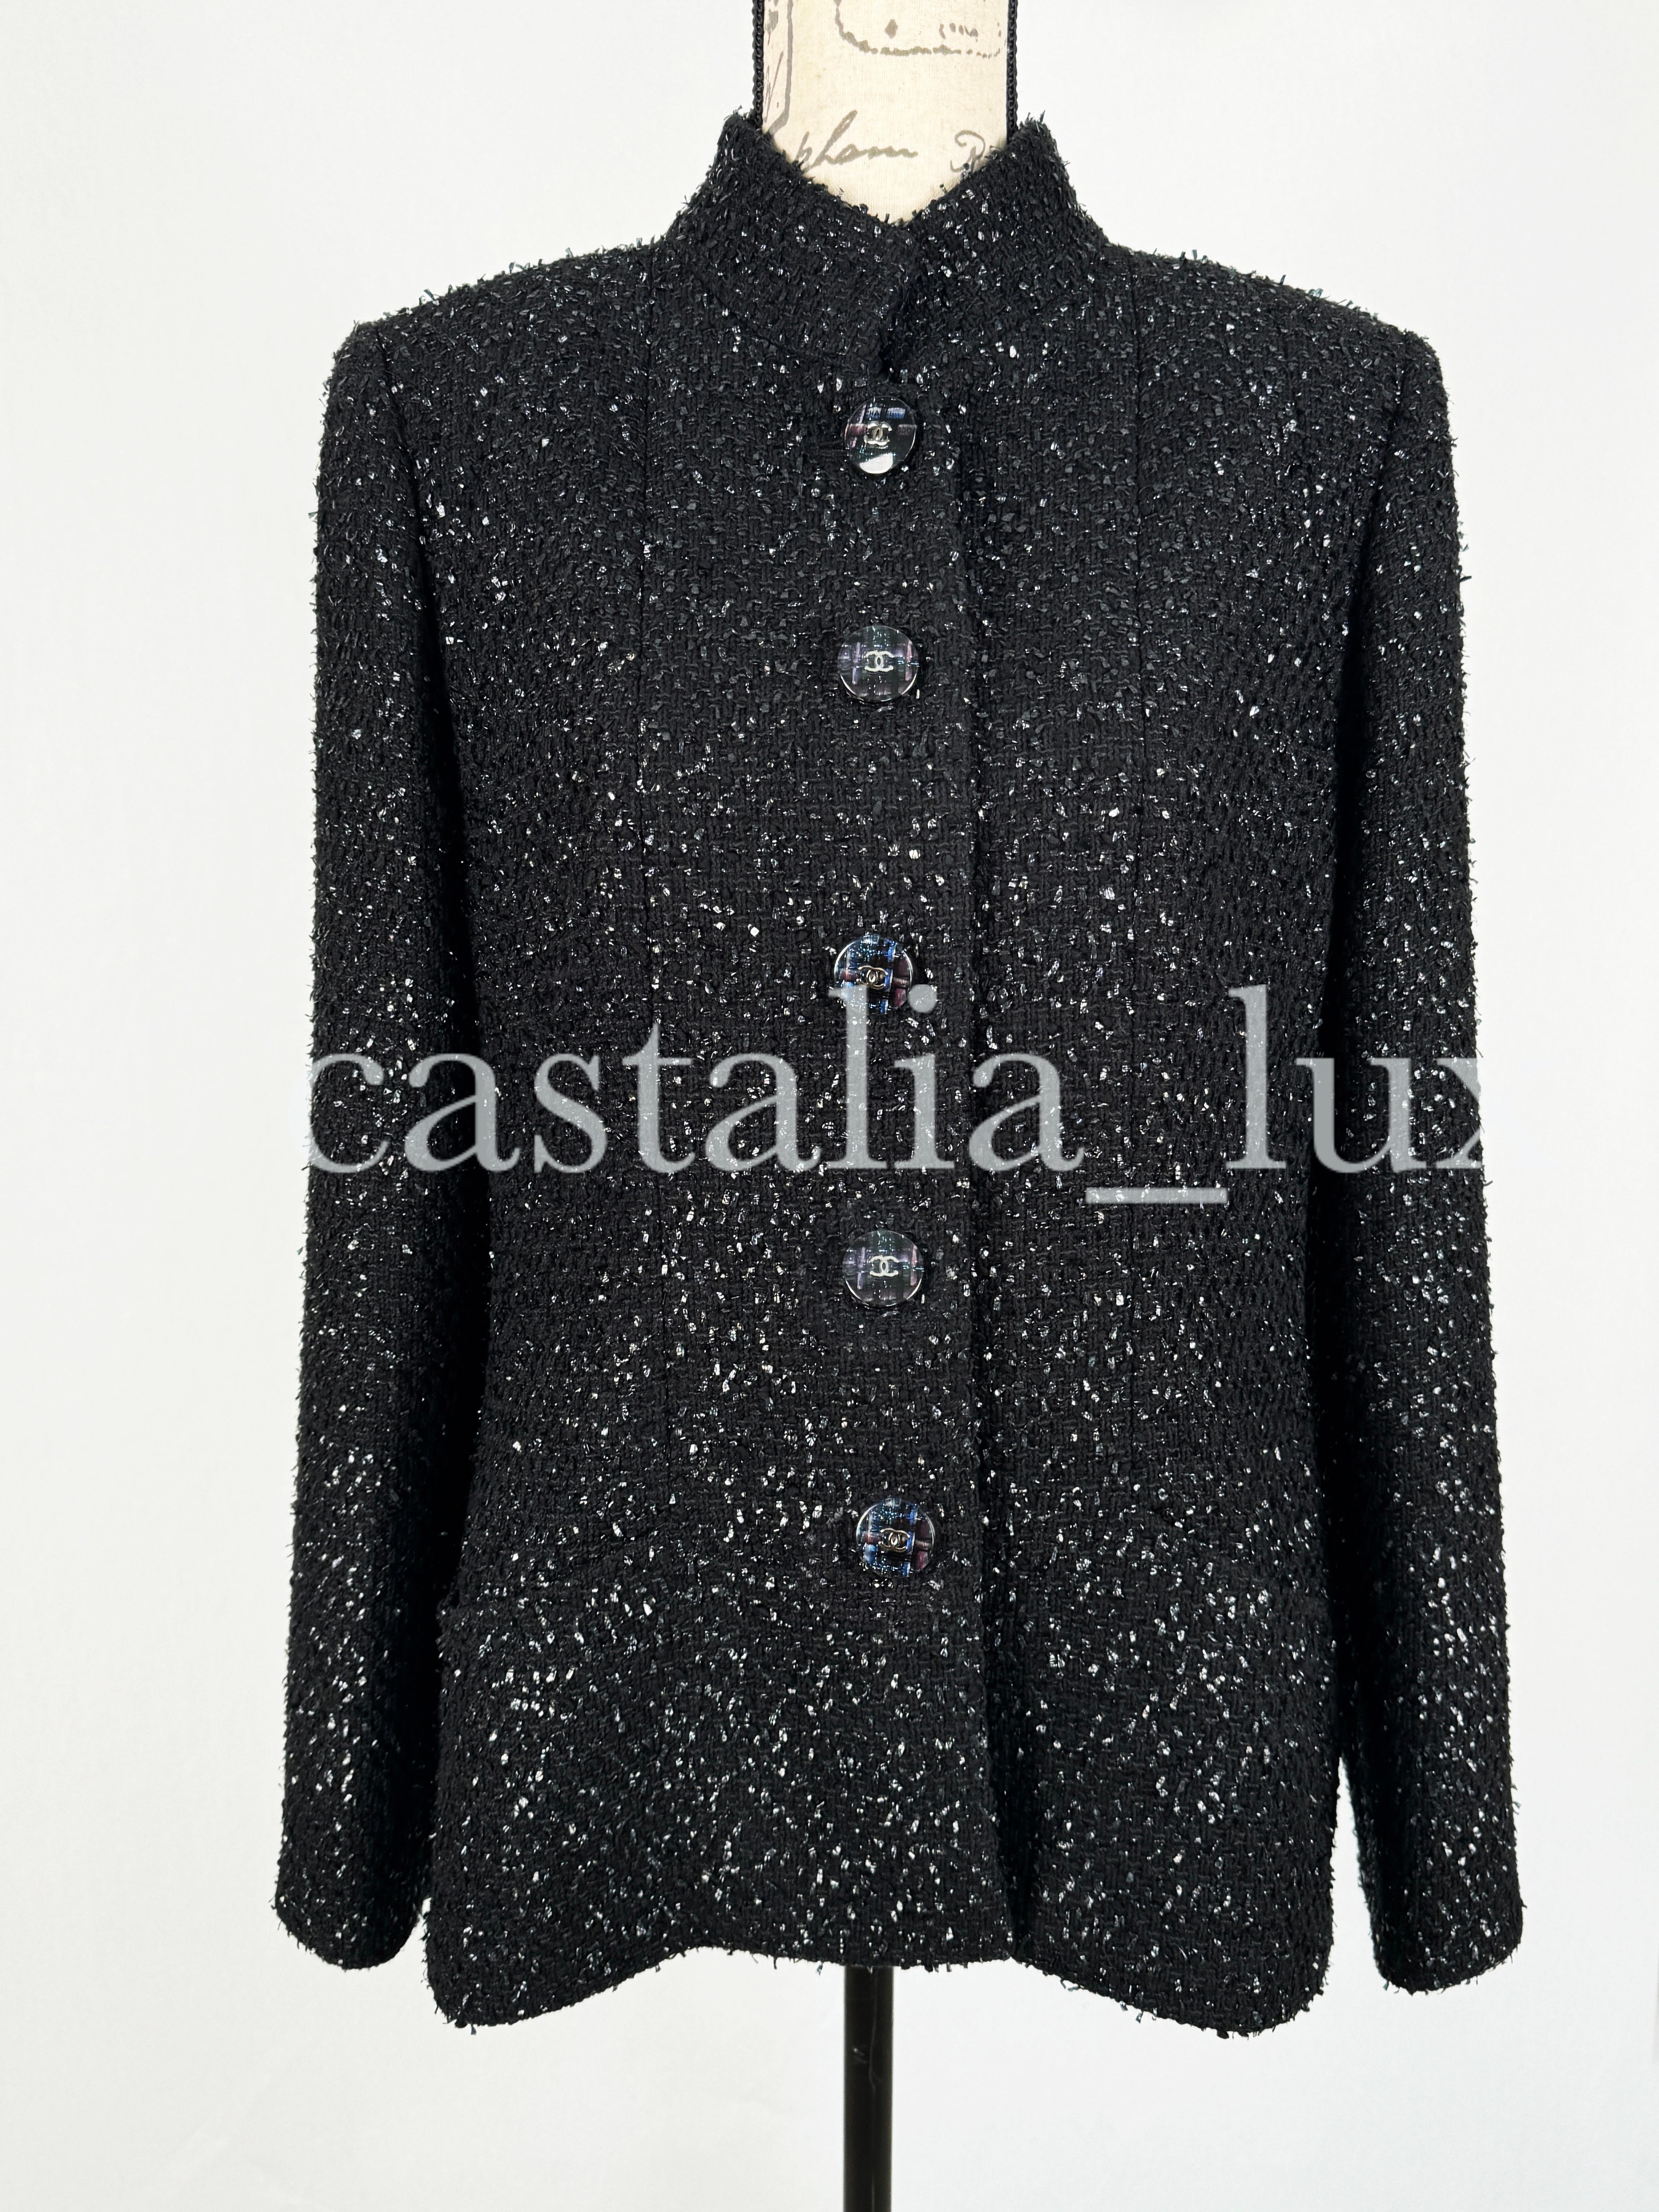 Chanel New 2019 Spring Timeless Black Tweed Jacket For Sale 9